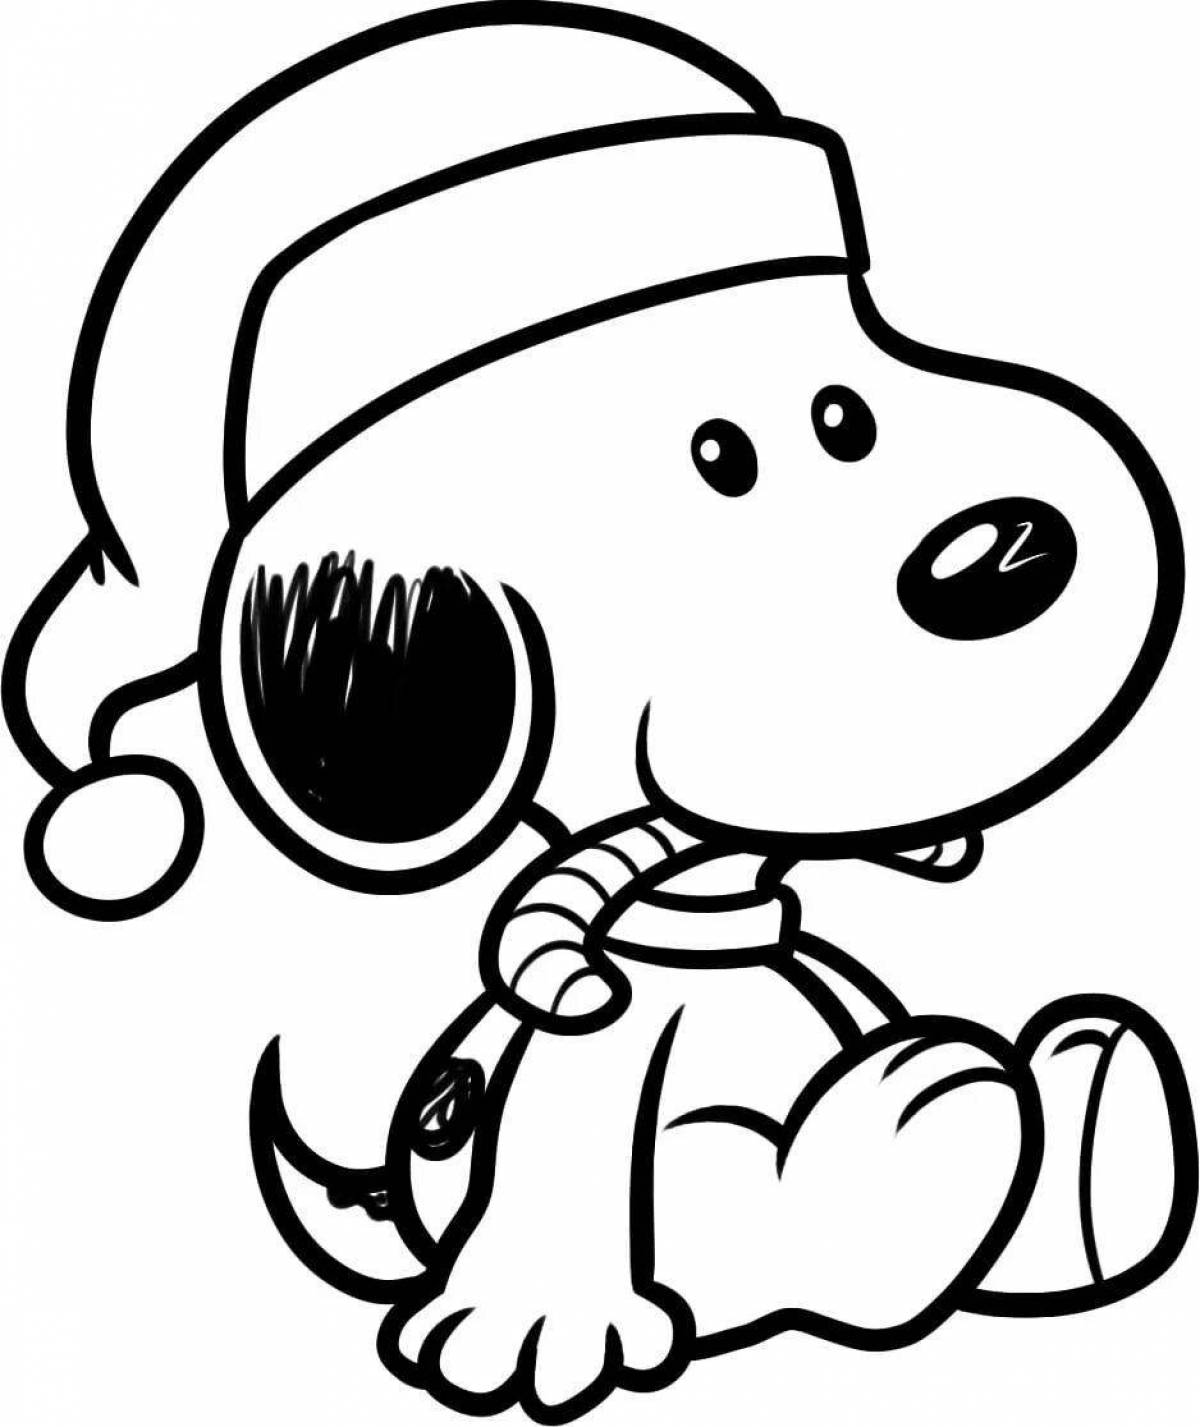 Joyful Christmas dog coloring book